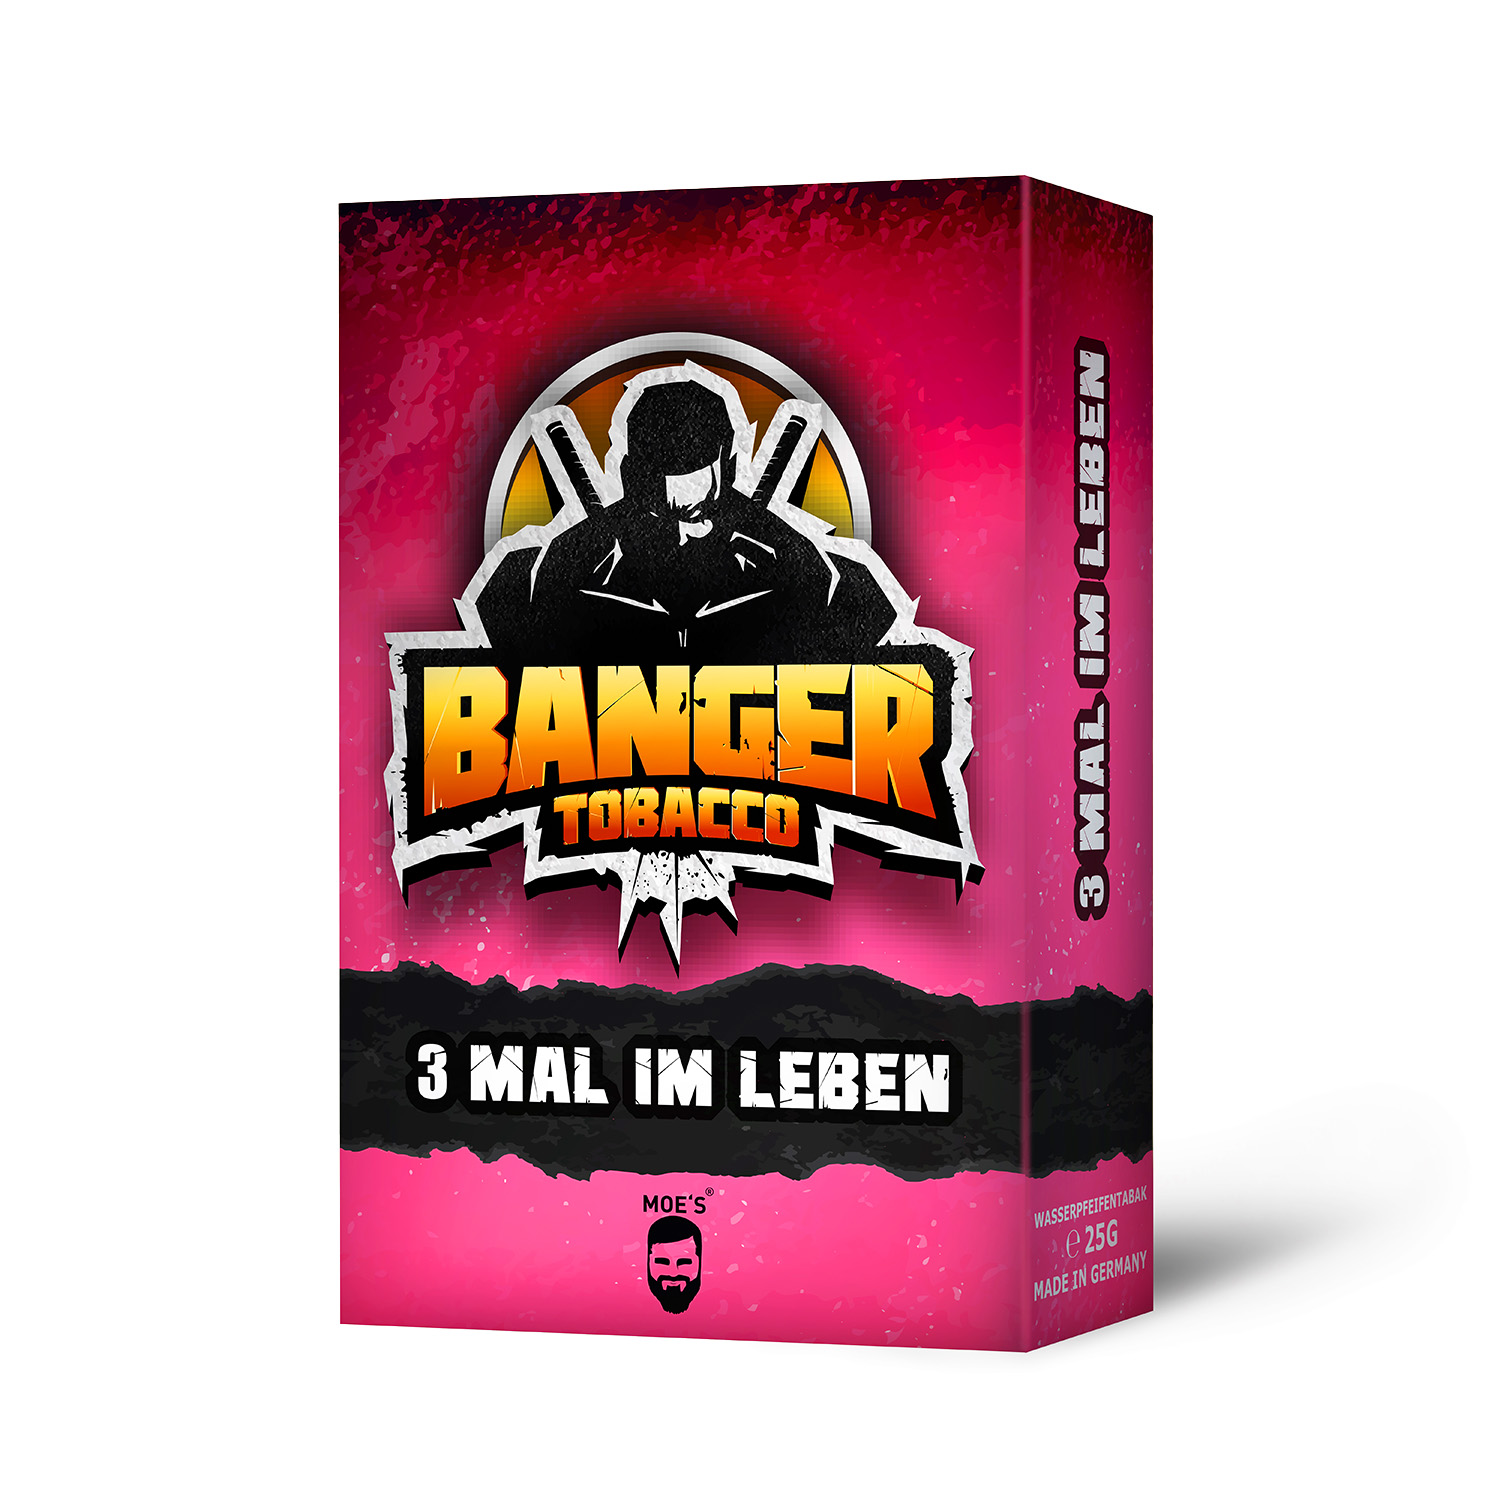 BANGER - 3 MAL IM LEBEN